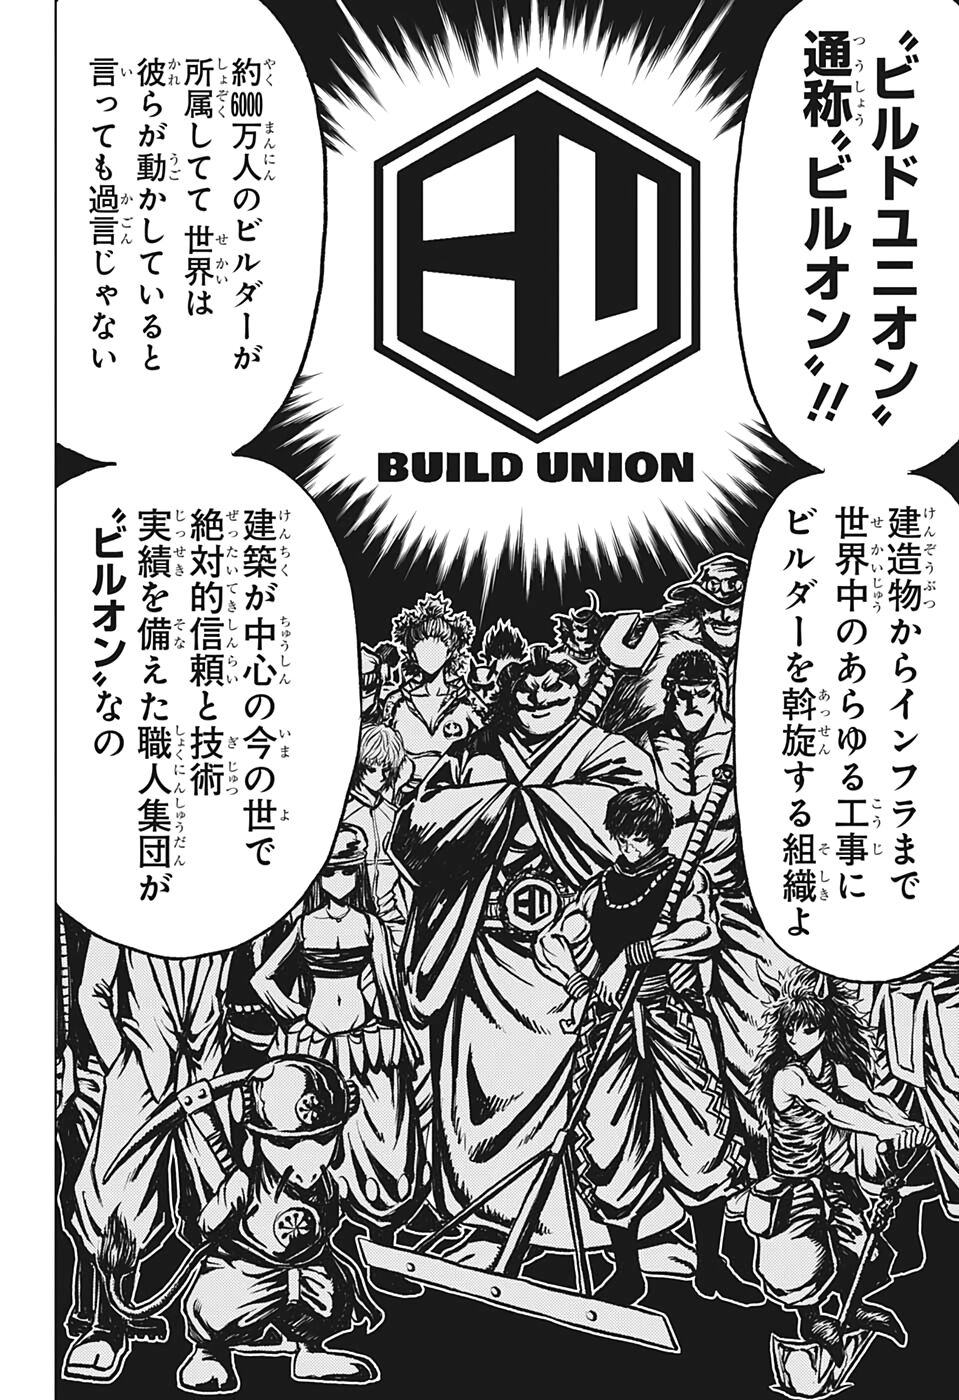 Build Union Build King Wiki Fandom